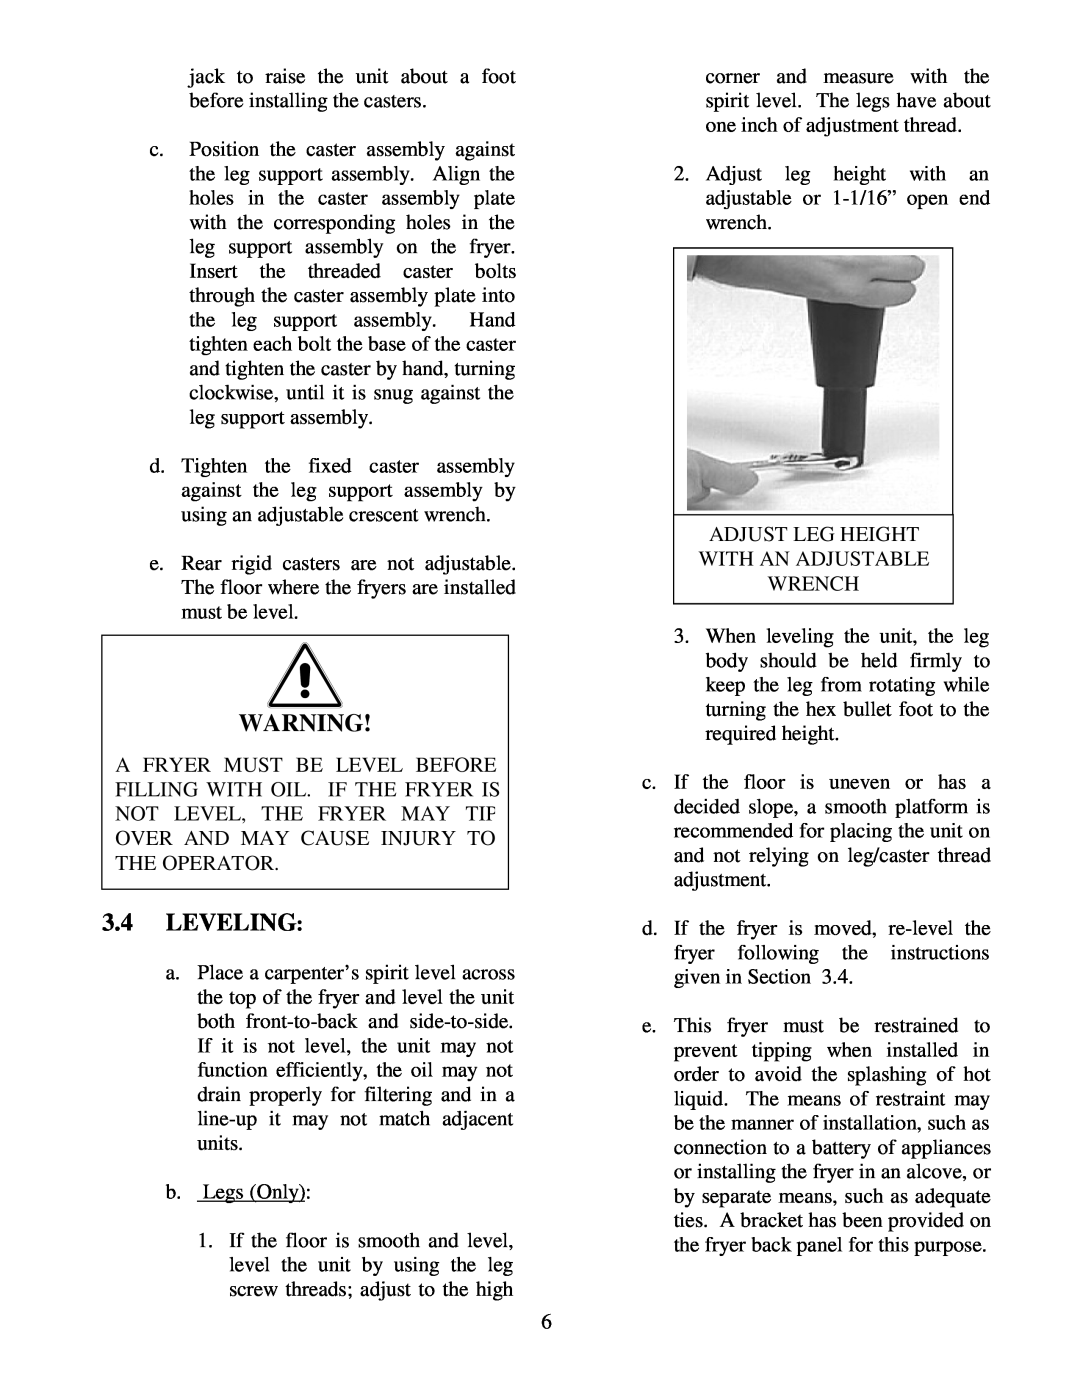 Frymaster 38 Series operation manual 3.4LEVELING 